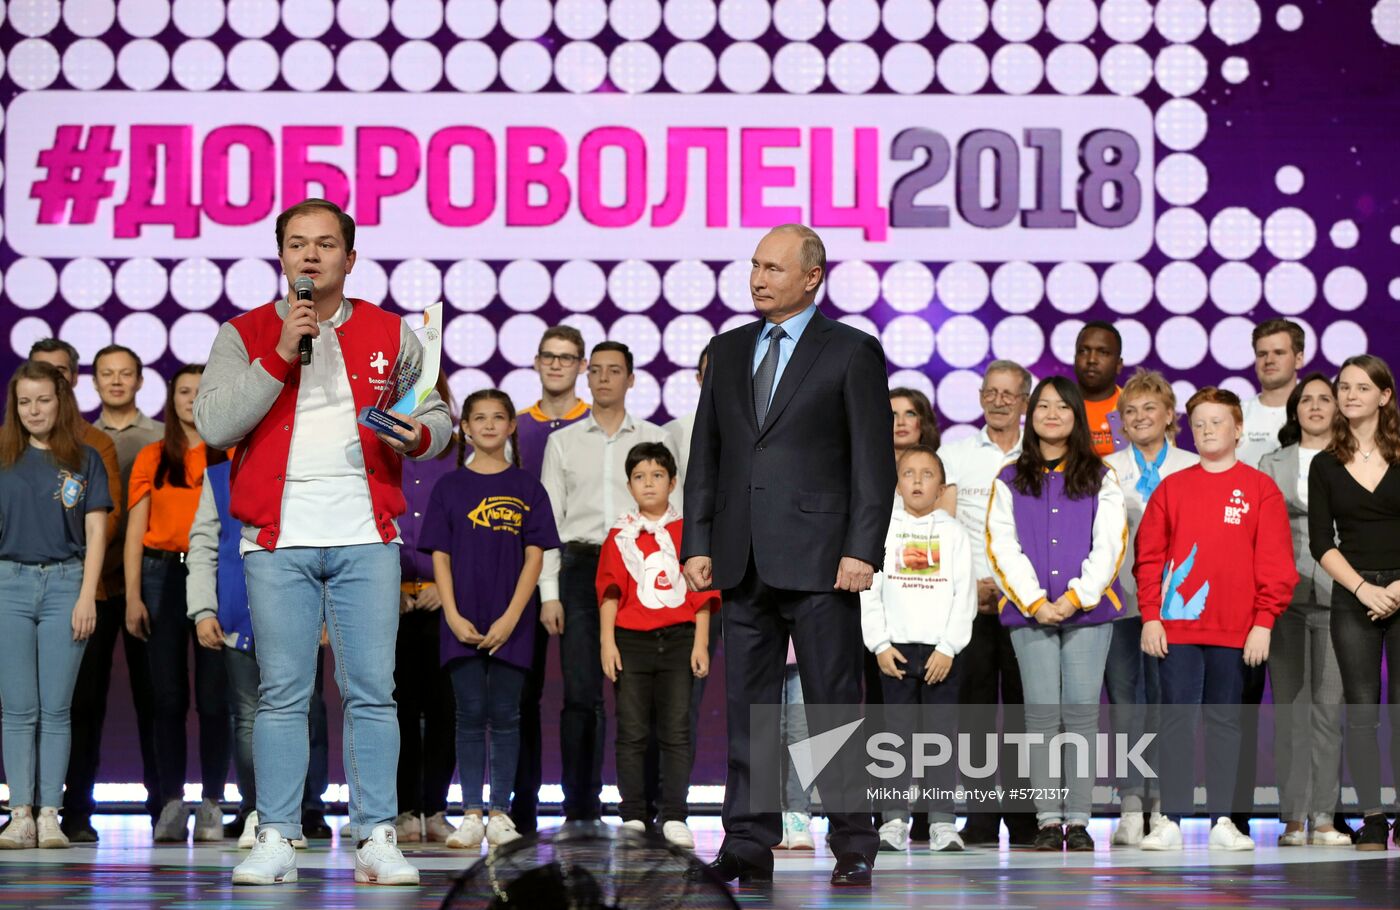 President Vladimir Putin presents 2018 Russian Volunteer Awards